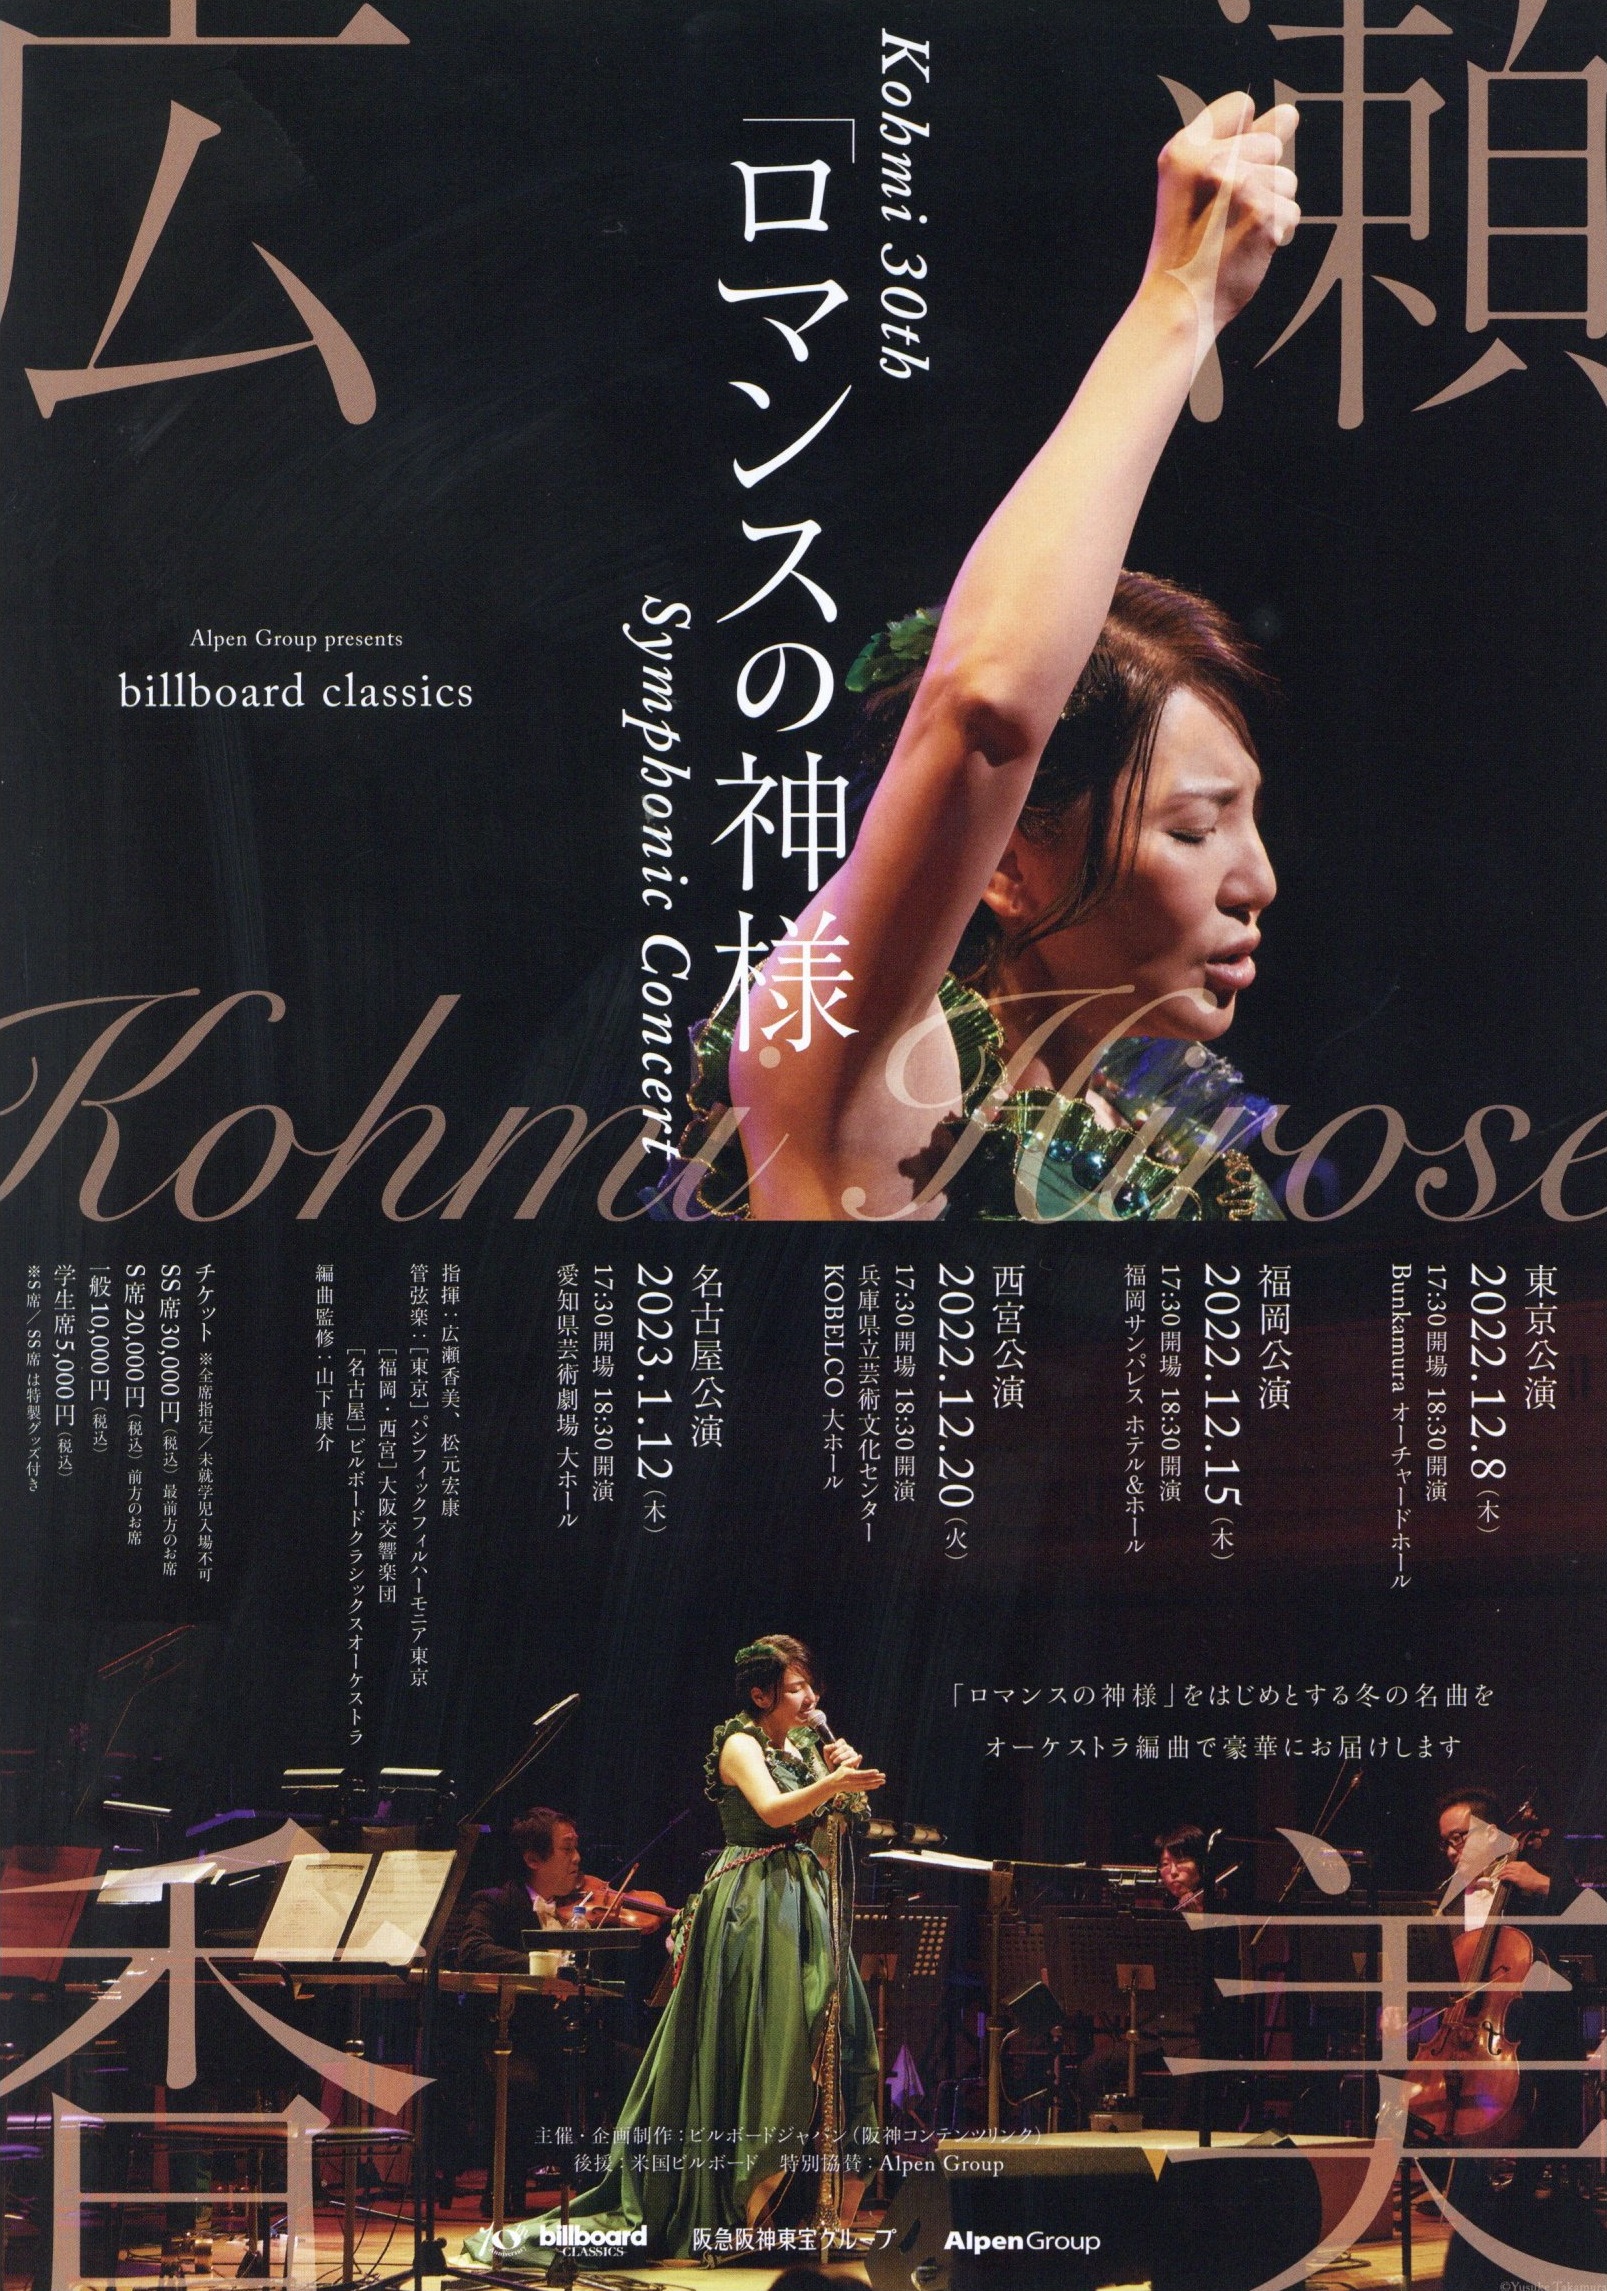 Alpen Groups presents billboard classics Kohmi 30th 「ロマンスの神様」Symphonic Concert